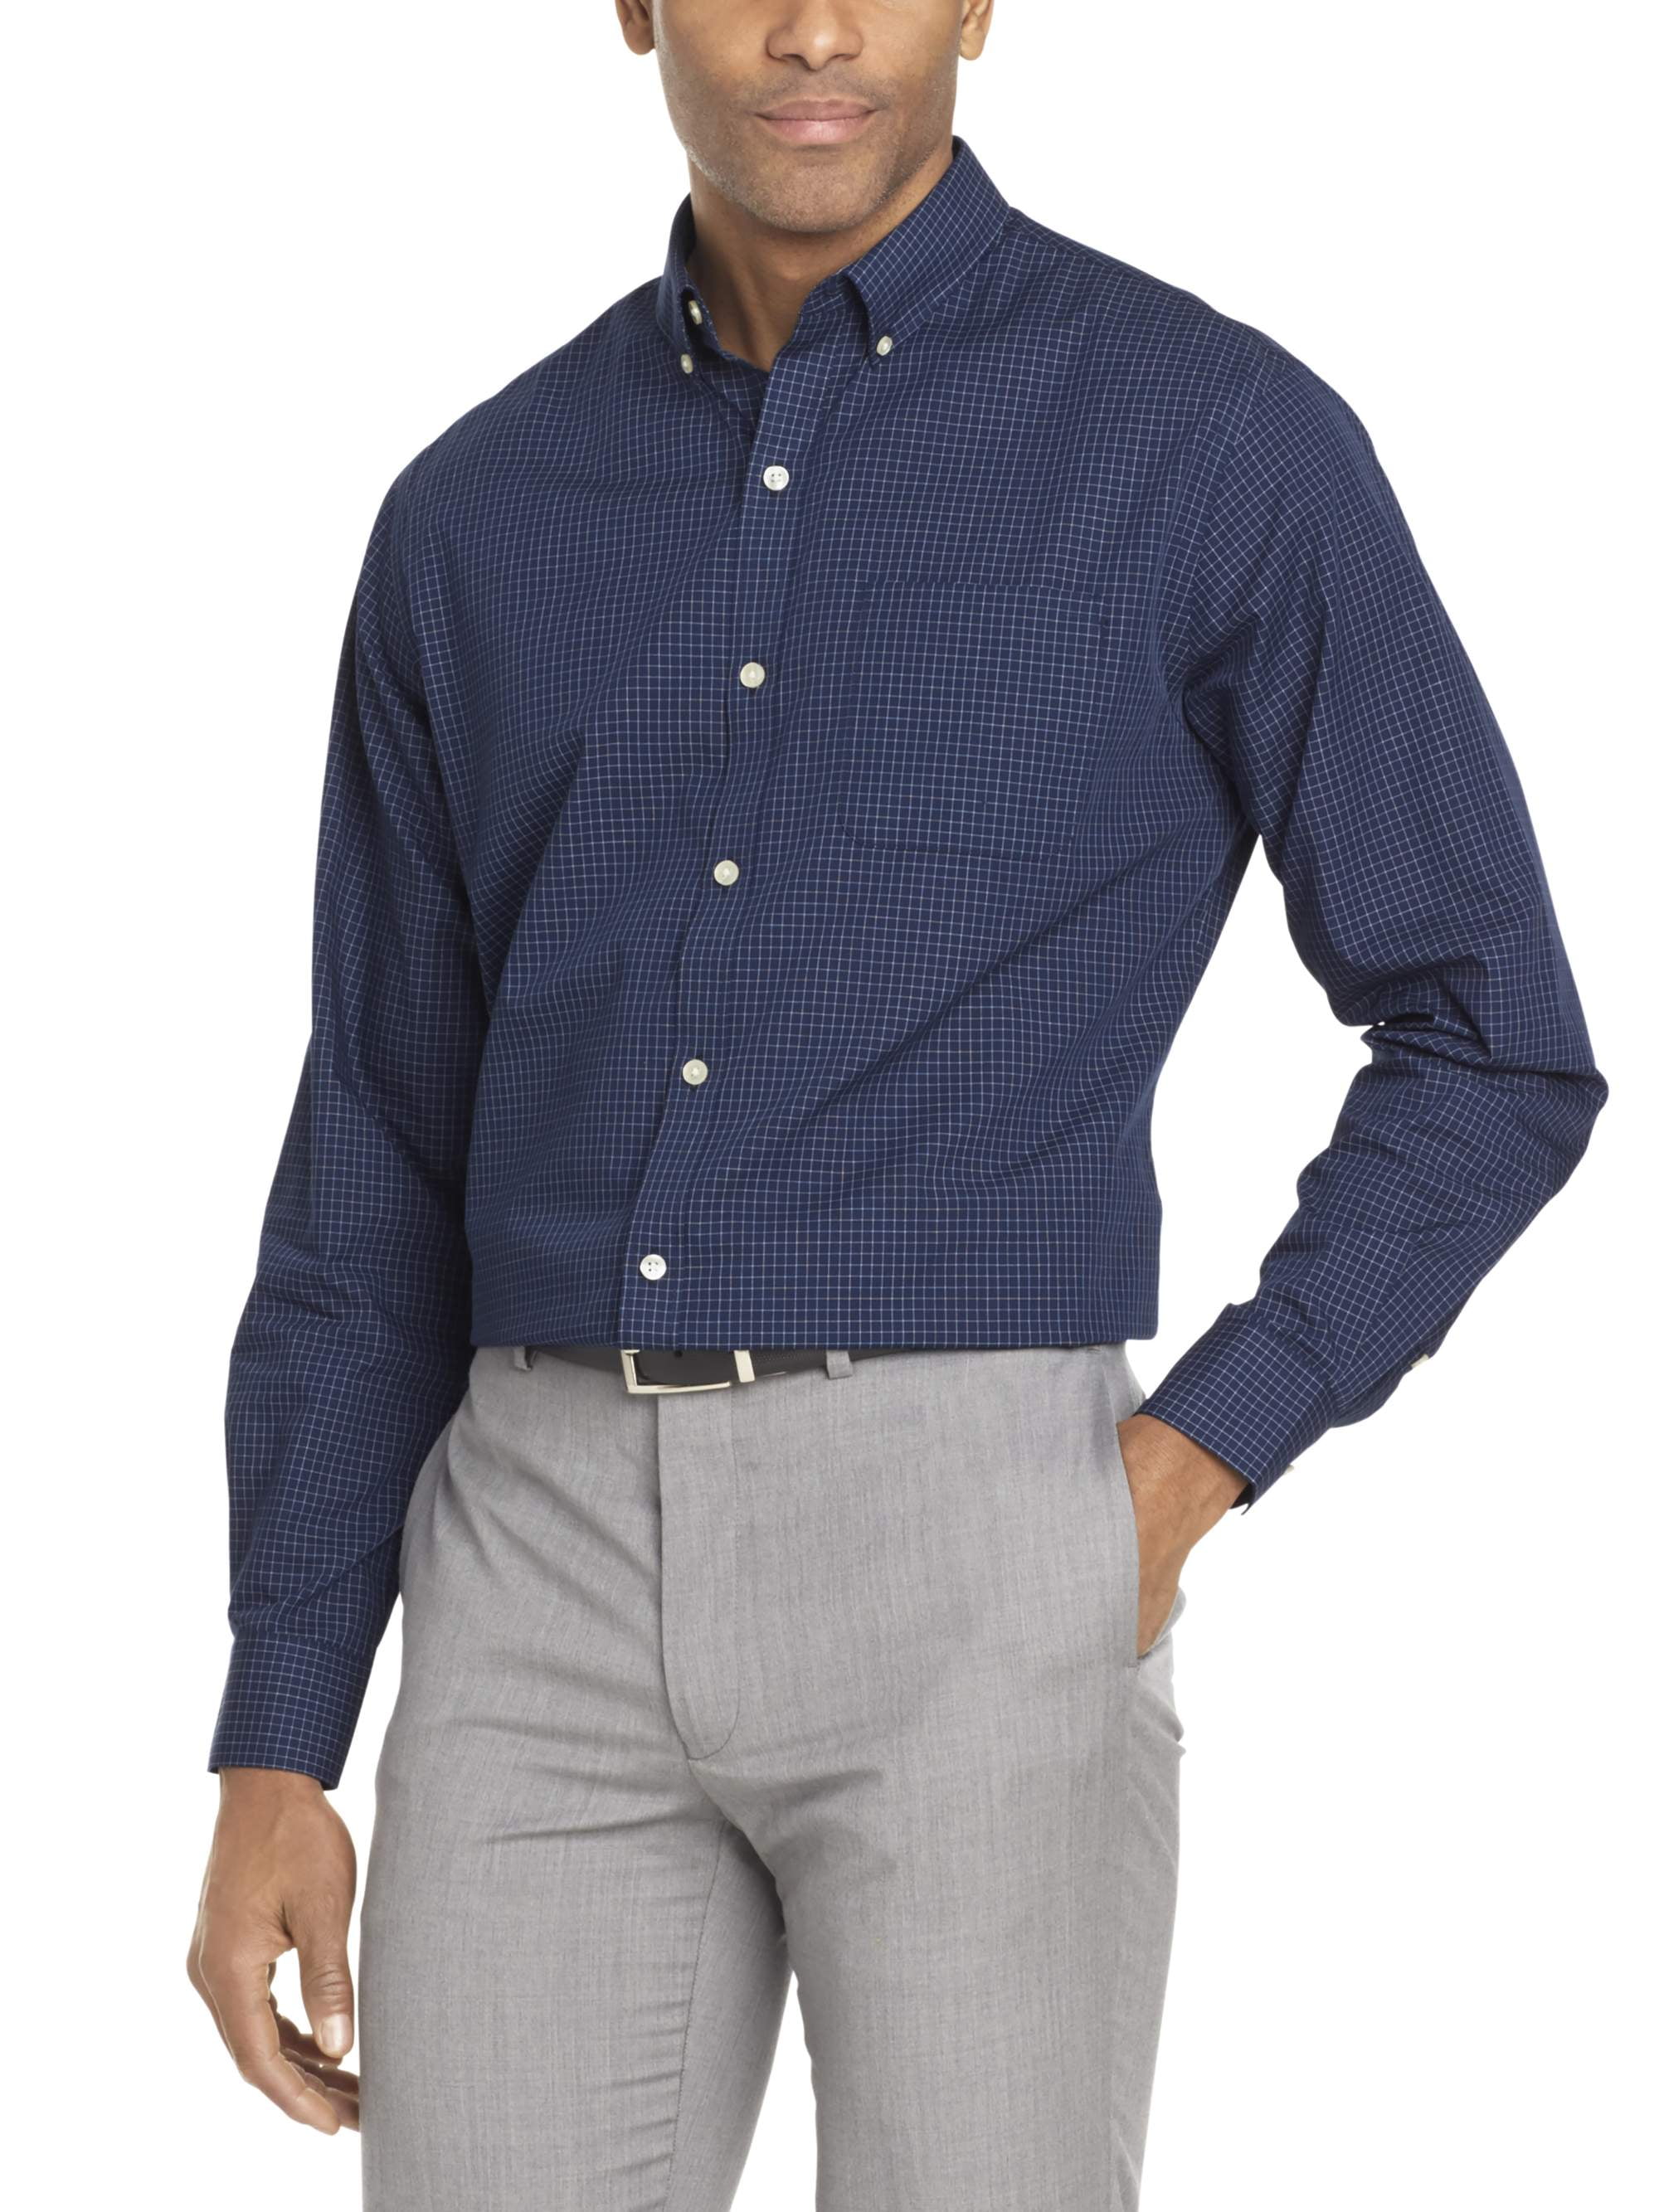 Van Heusen Wrinkle Free Poplin Long Sleeve Shirt - Walmart.com